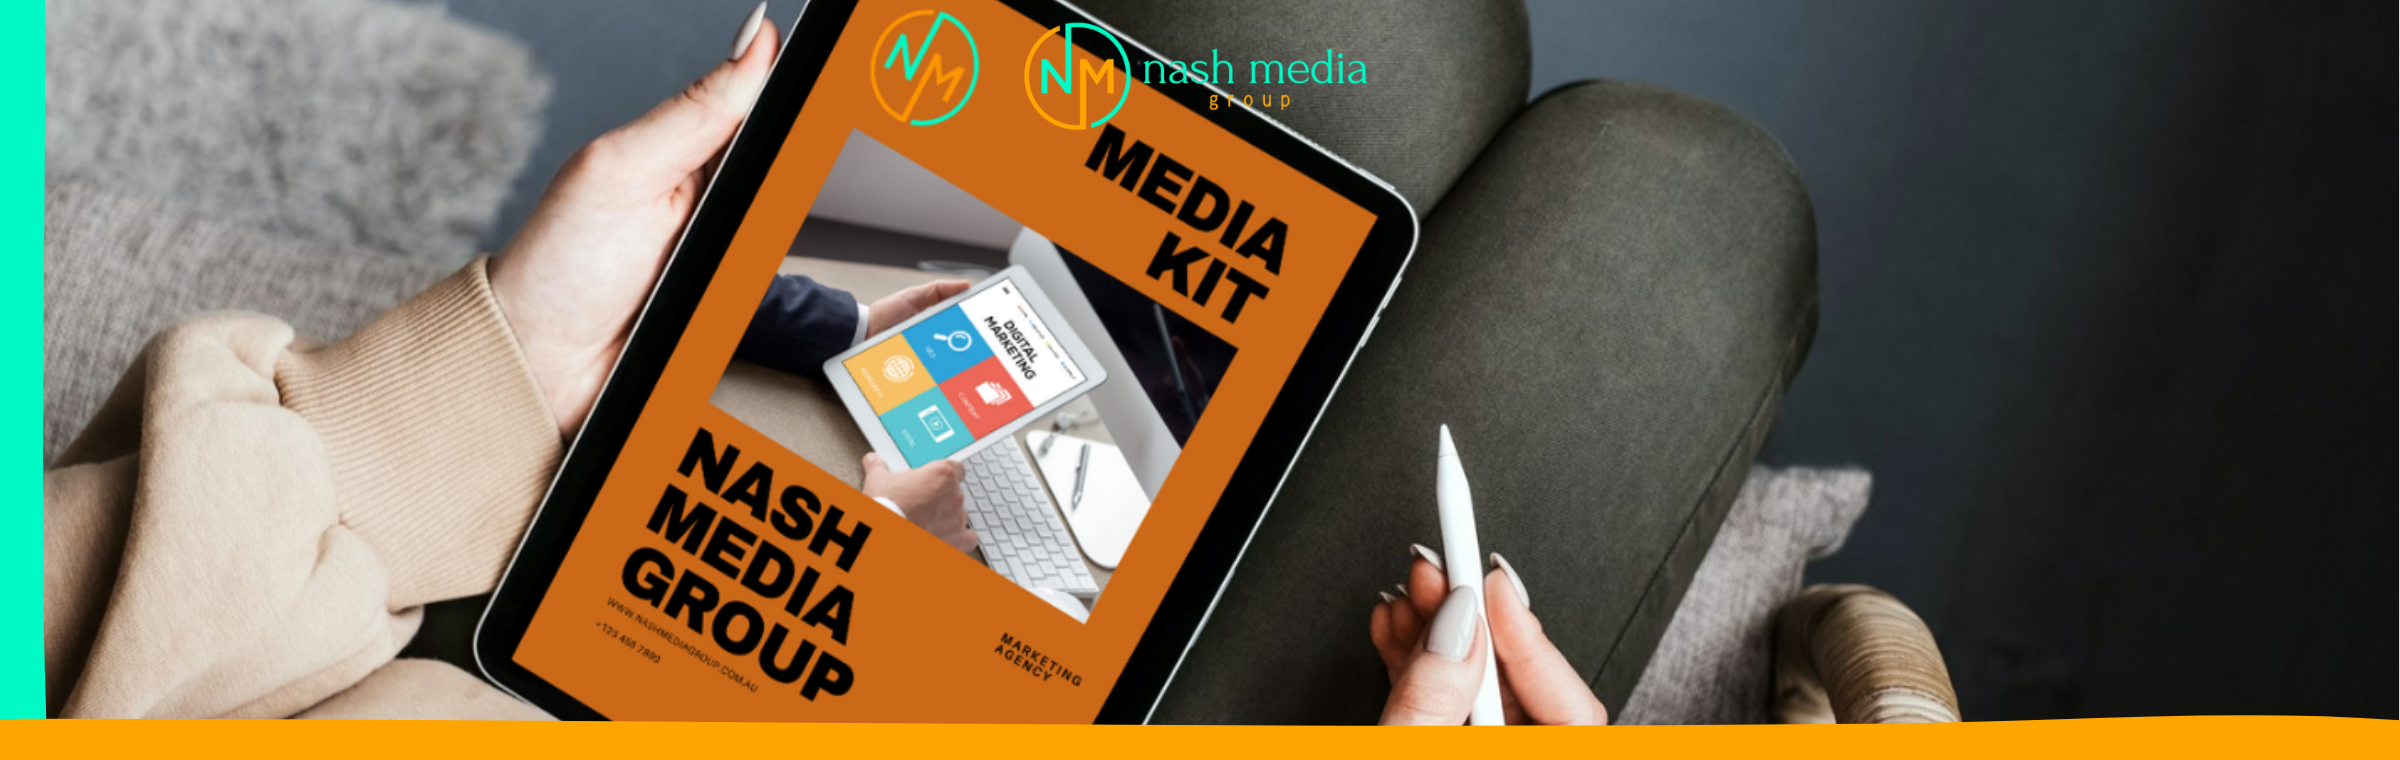 Nash Media Group Media Kit Featured Photo